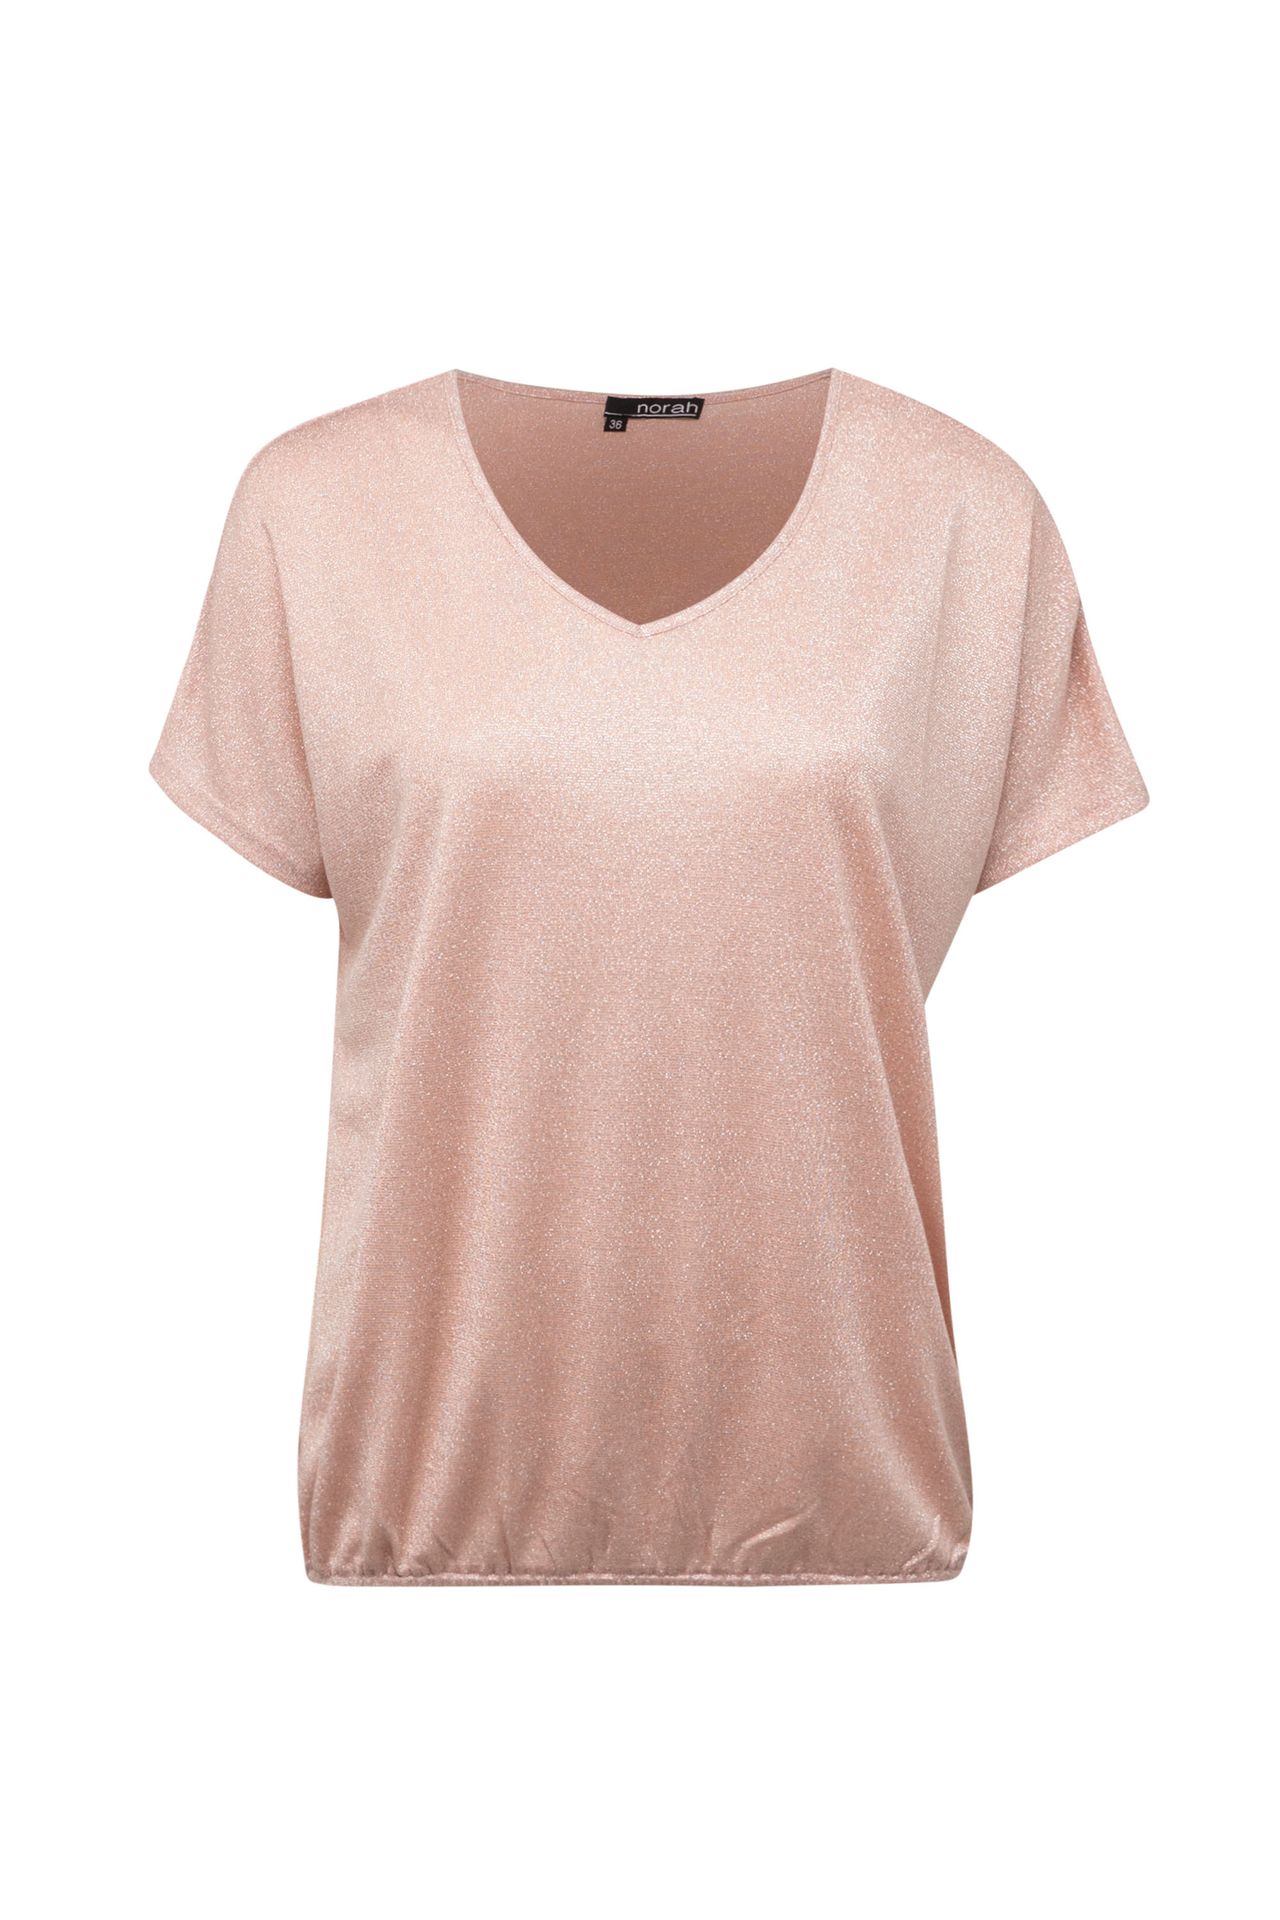 Norah Roze shirt met glitters rose 213834-907